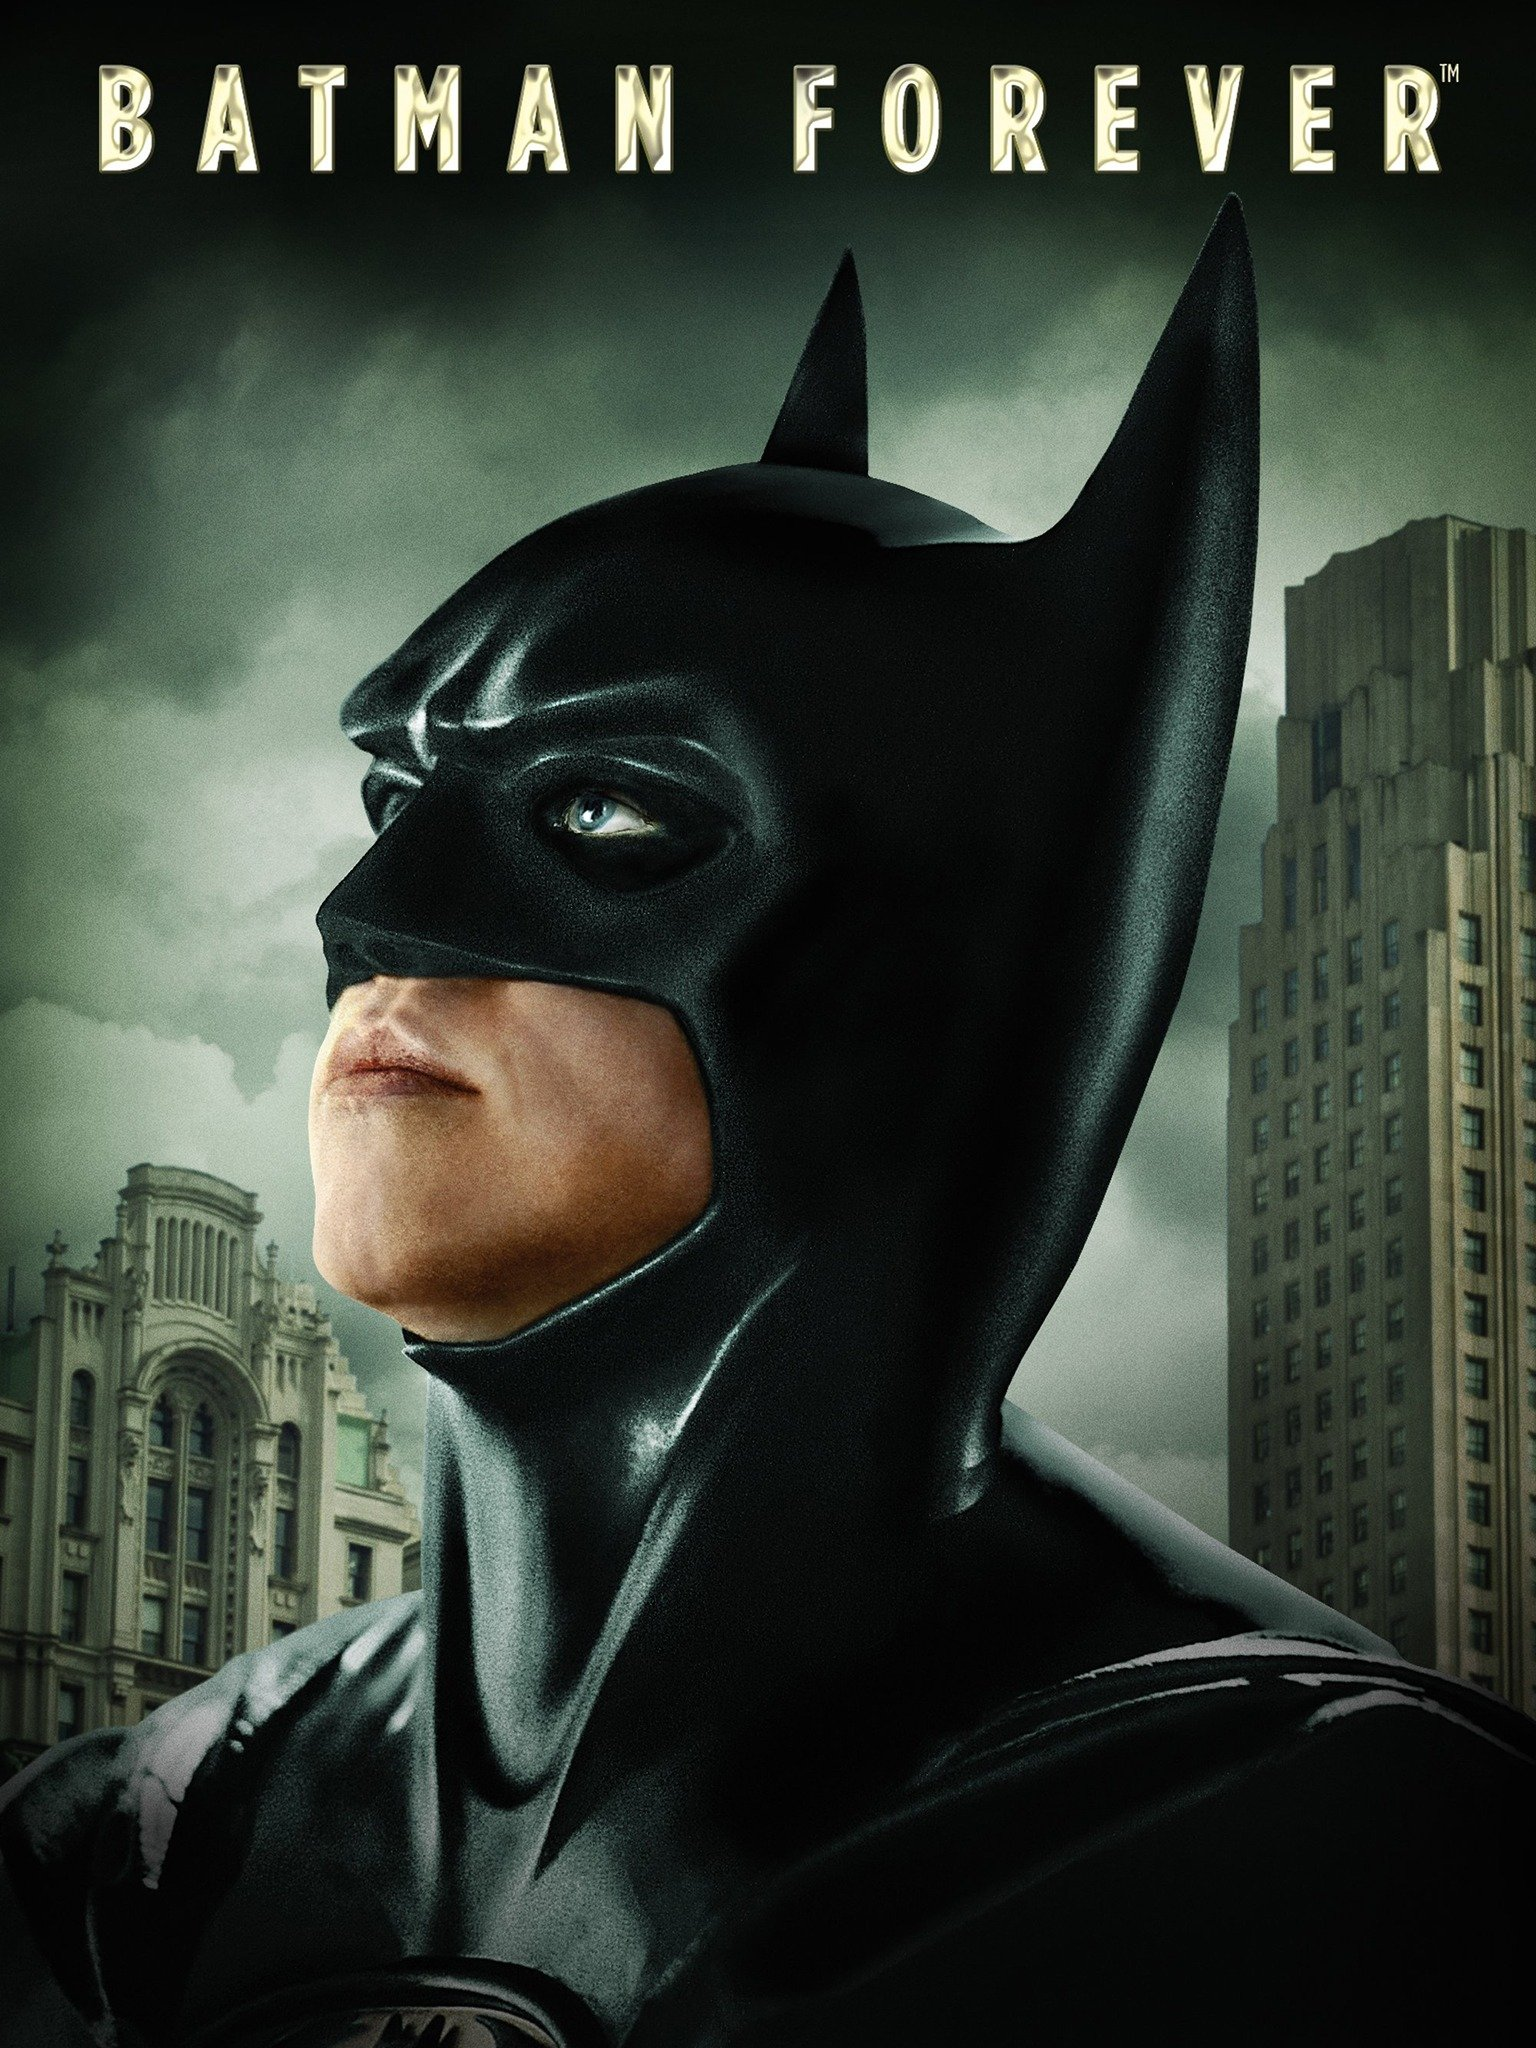 Prime Video: Batman Returns and Batman Forever 4K UHD digital $4.99 each